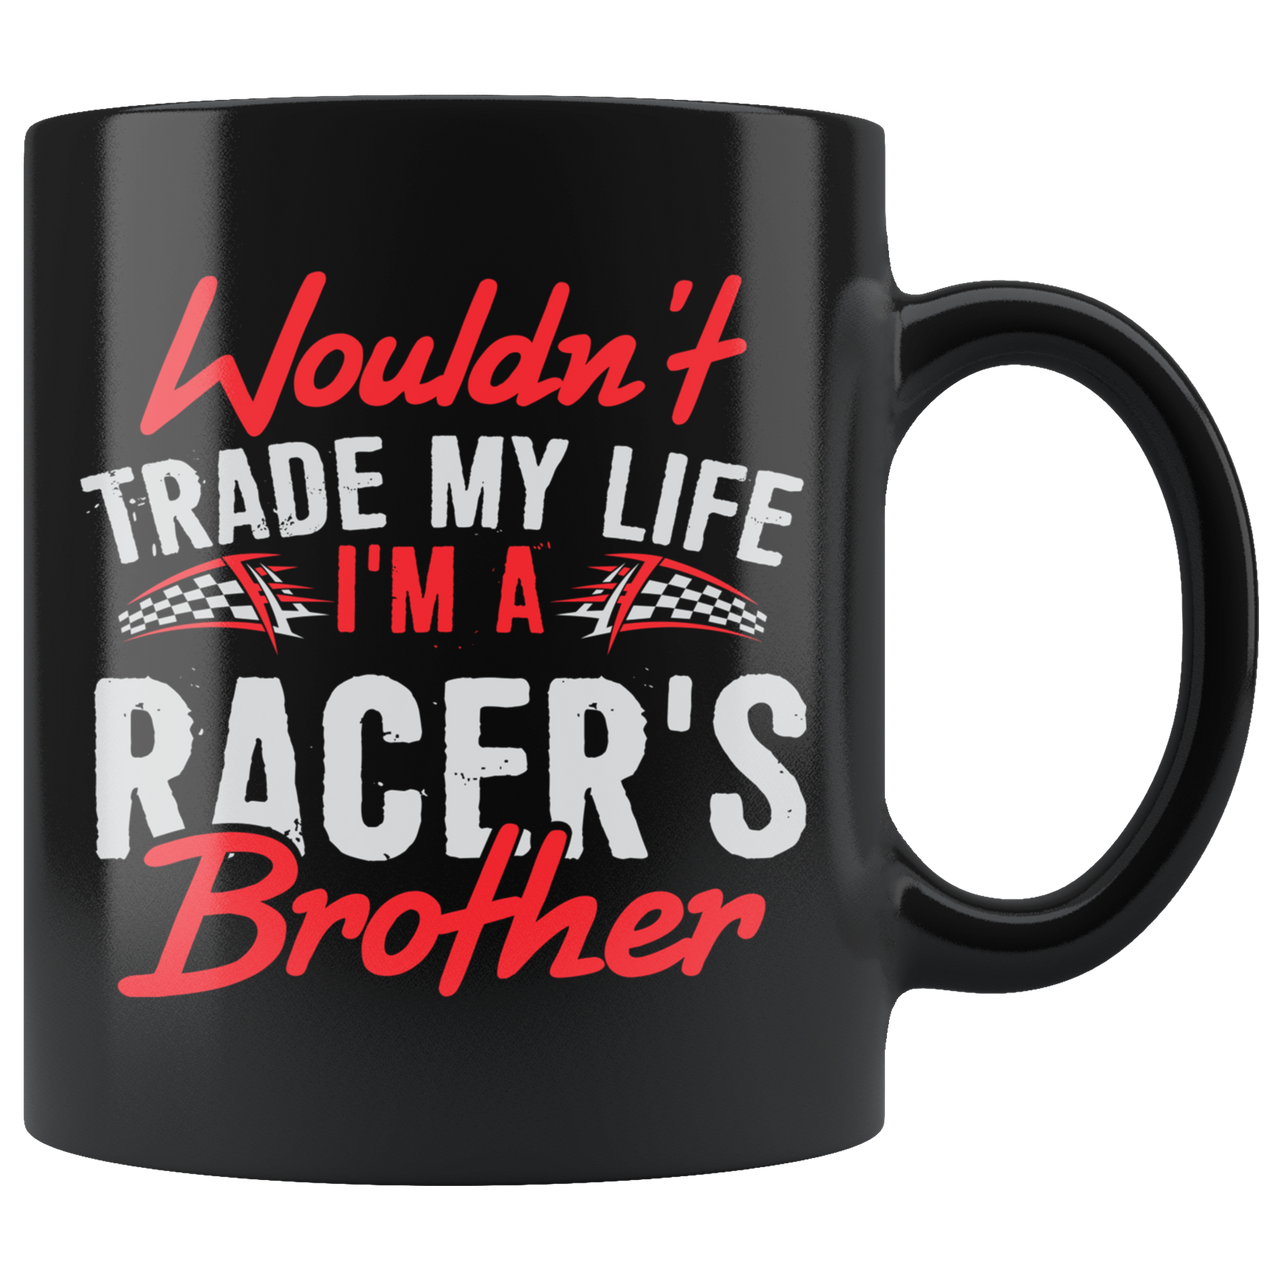 Wouldn't Trade My Life I'm A Racer's Brother Mug!